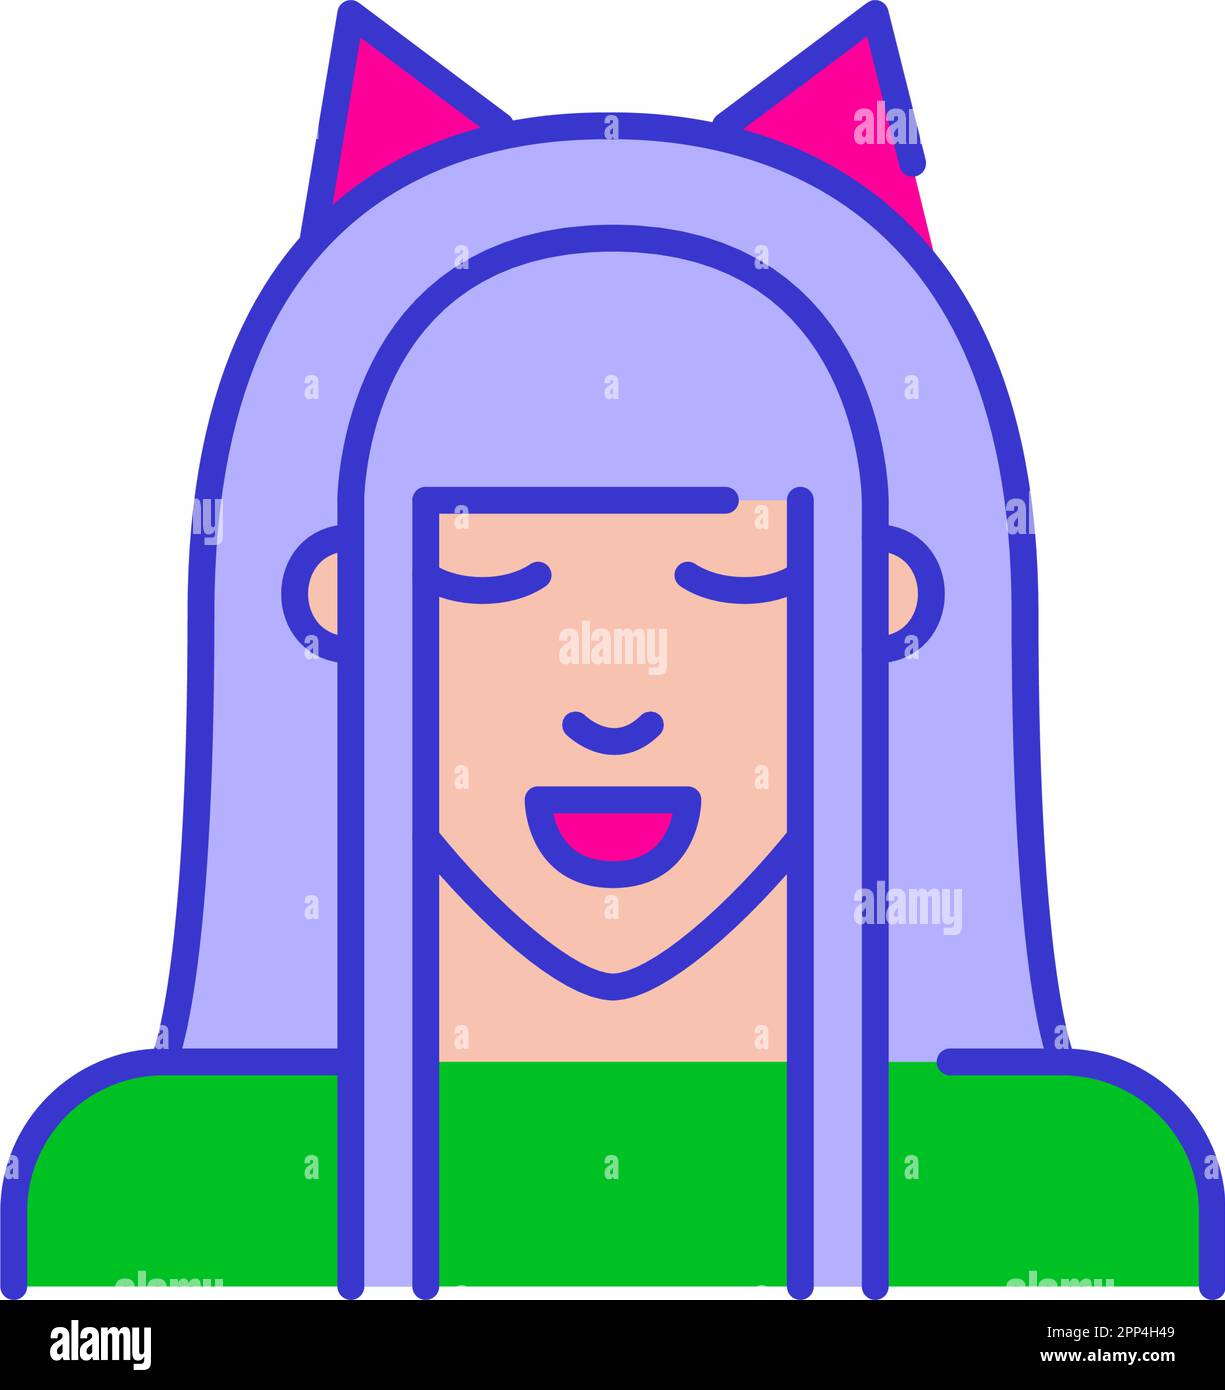 icons anime girl cat, icons anime and icons anime girl - image